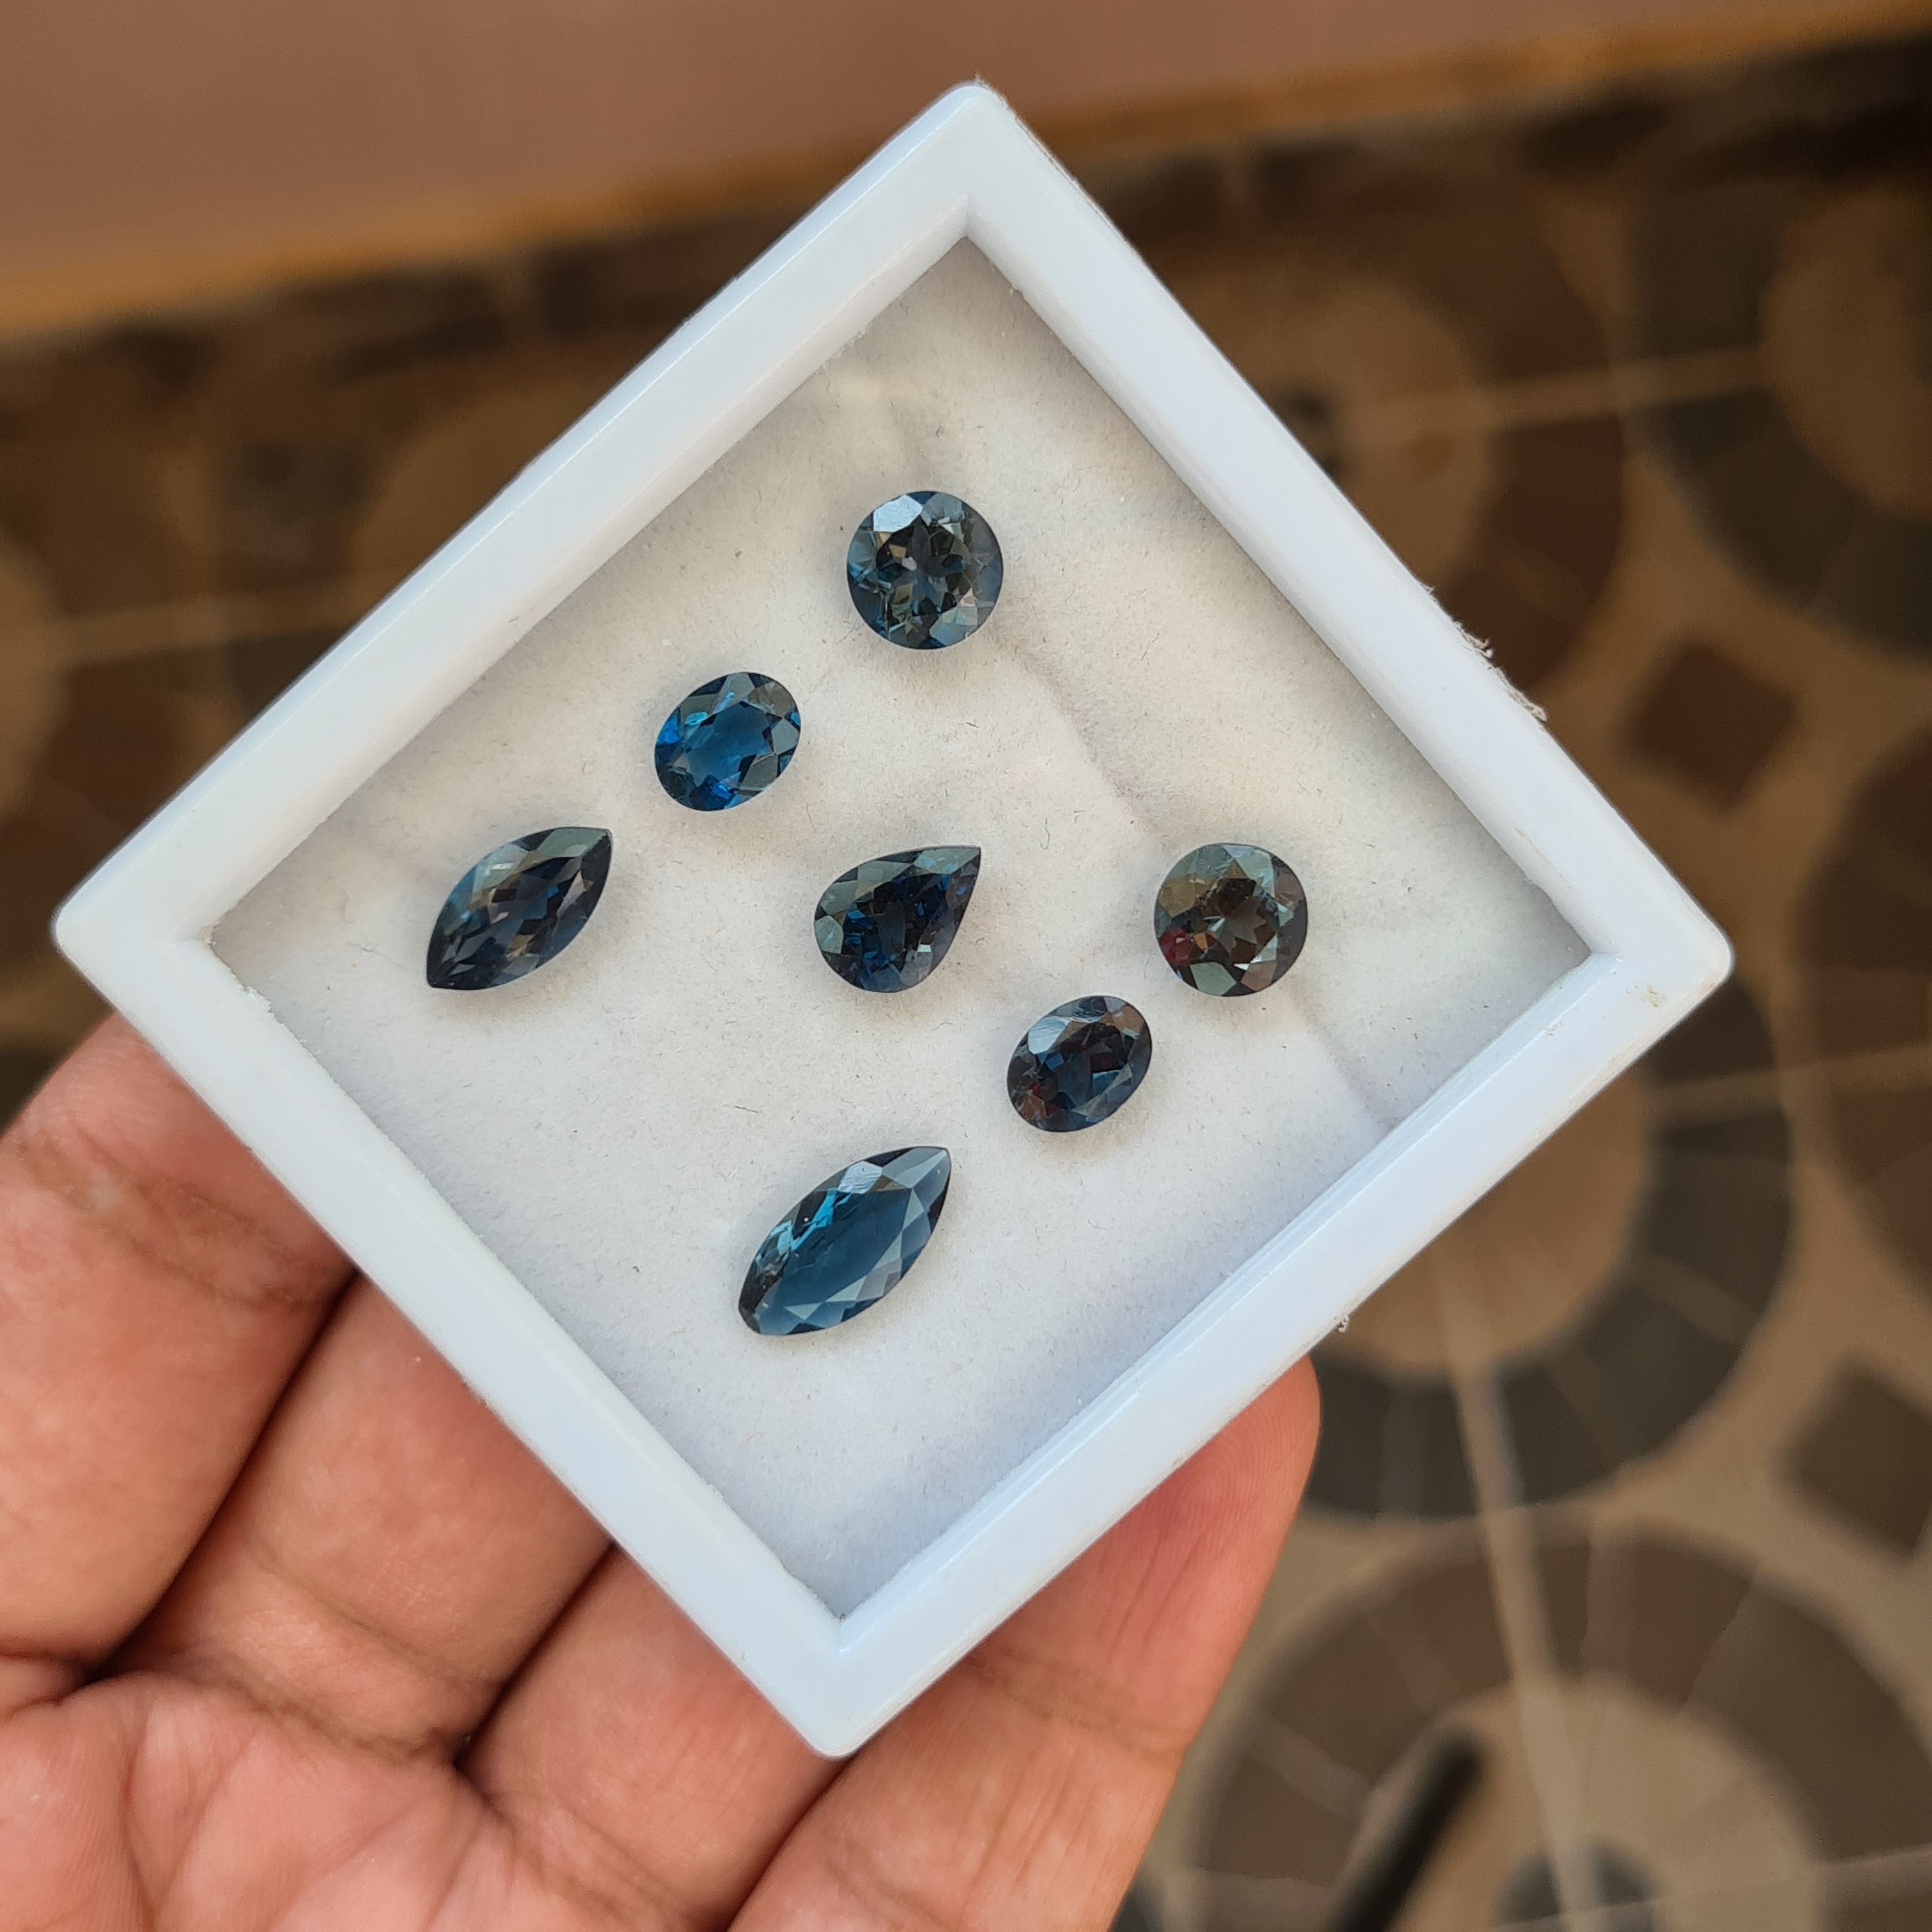 7 Pcs Natural London Blue Topaz Faceted Gemstone Mix Shape Size: 8-14mm - The LabradoriteKing